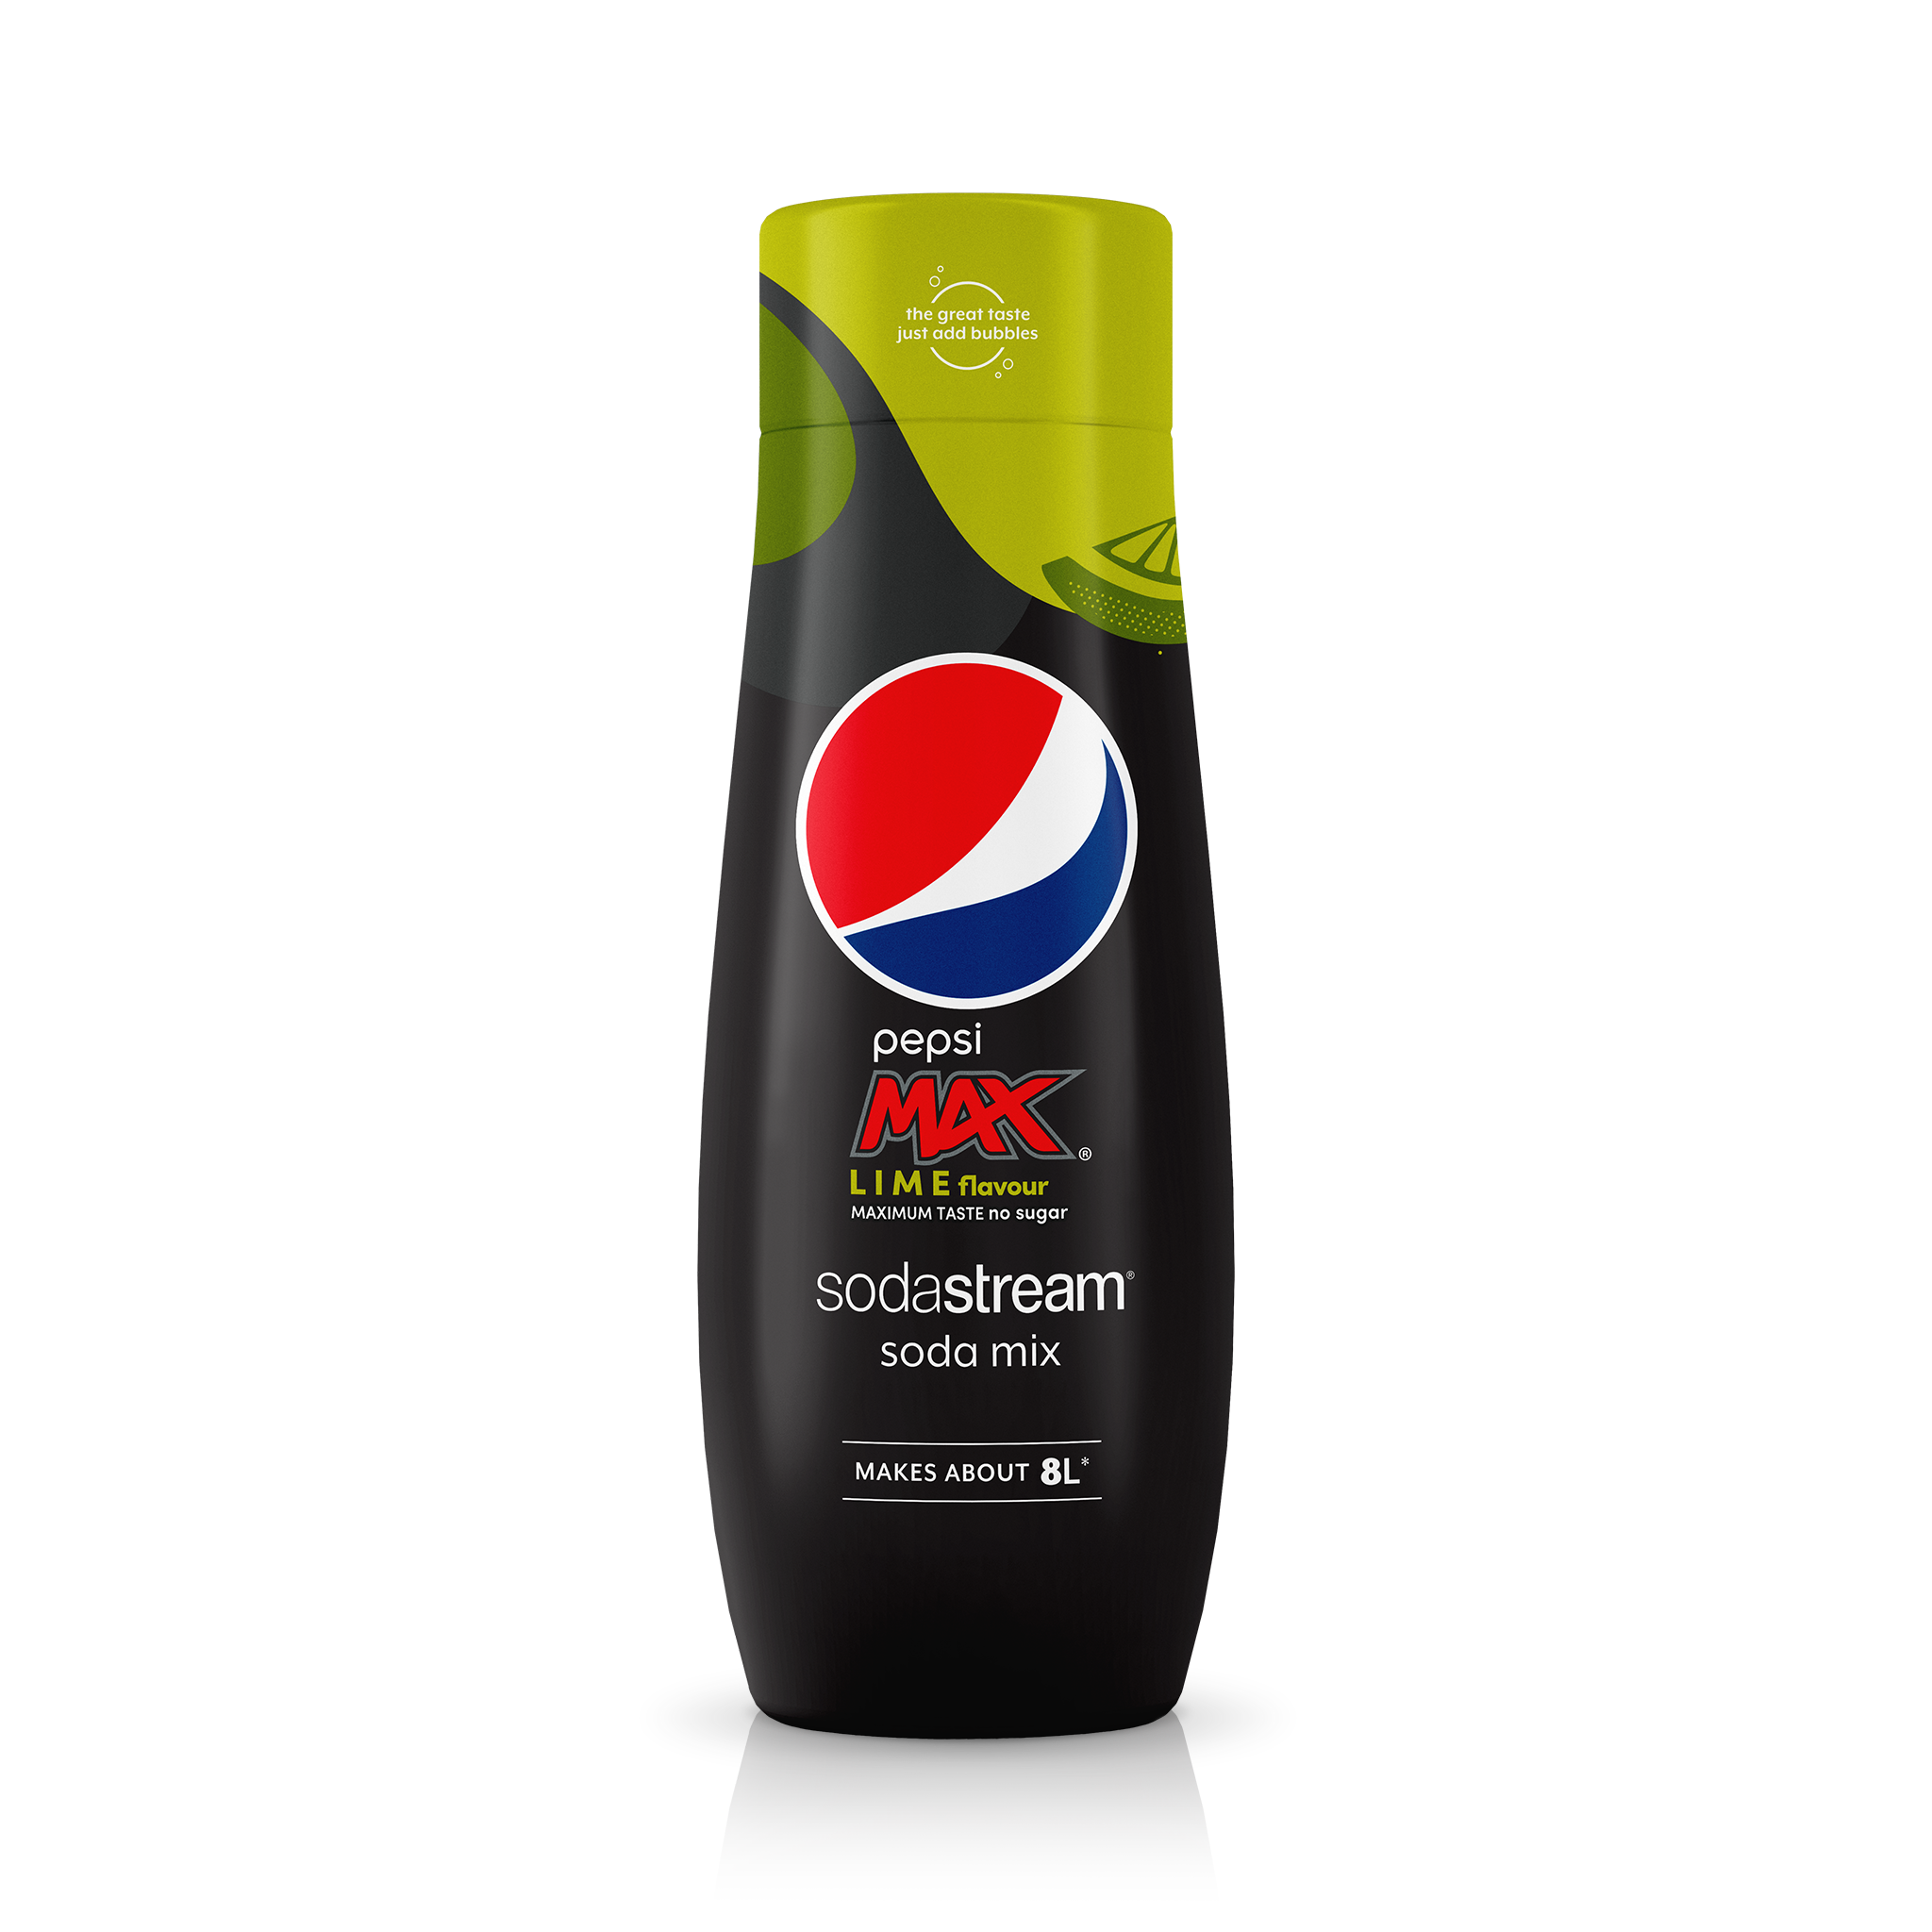 Pepsi Max Lime sodastream